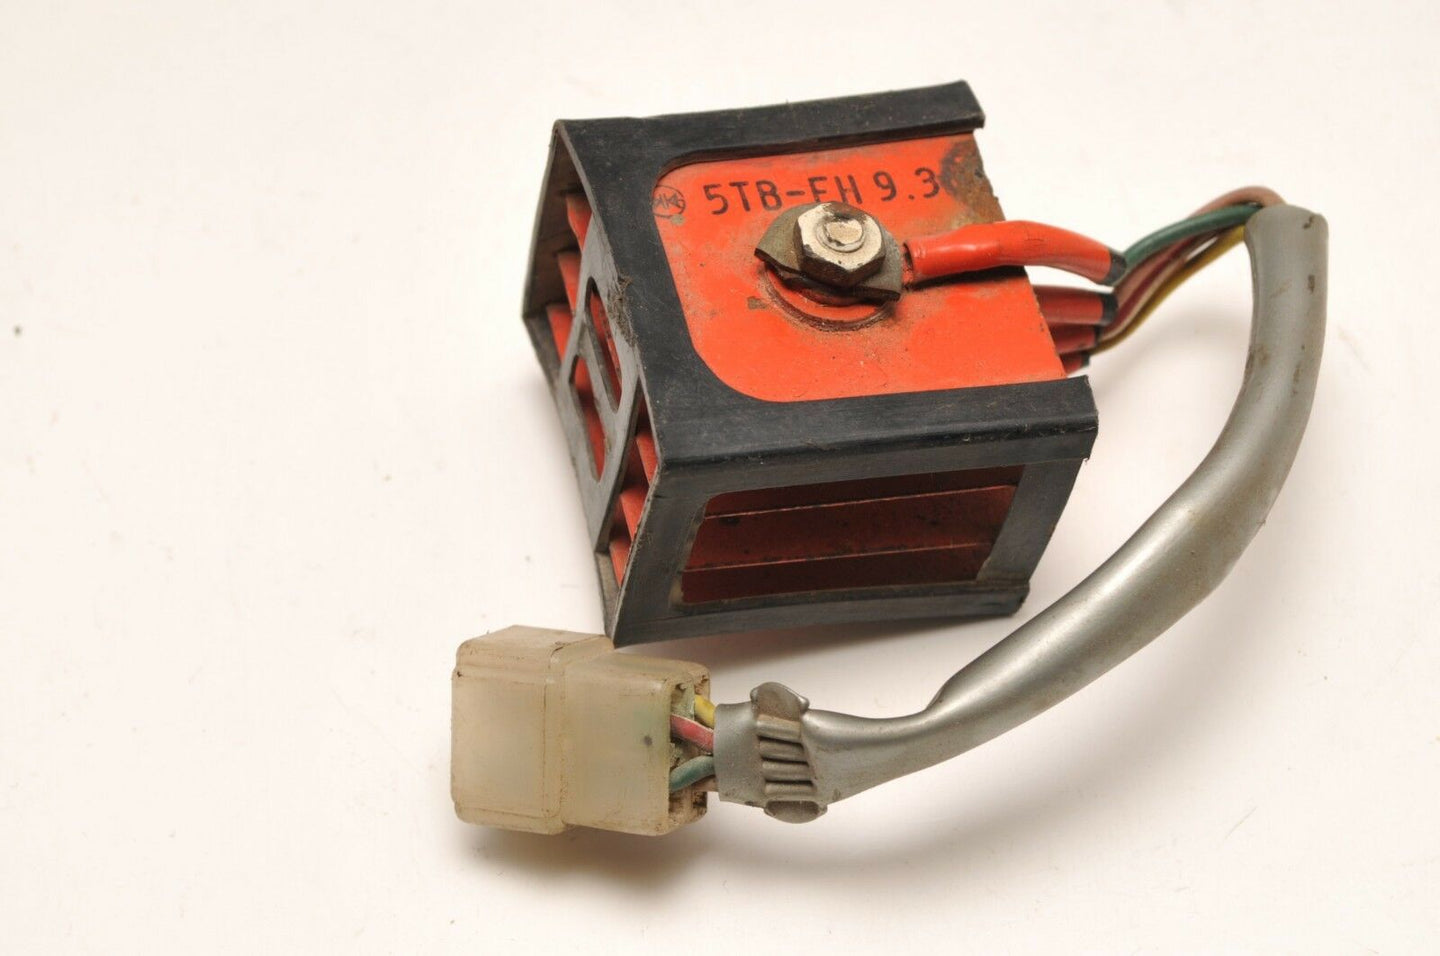 OEM Honda 5TB FH-9.3 Rectifier, Voltage Regulator, Used, as shown